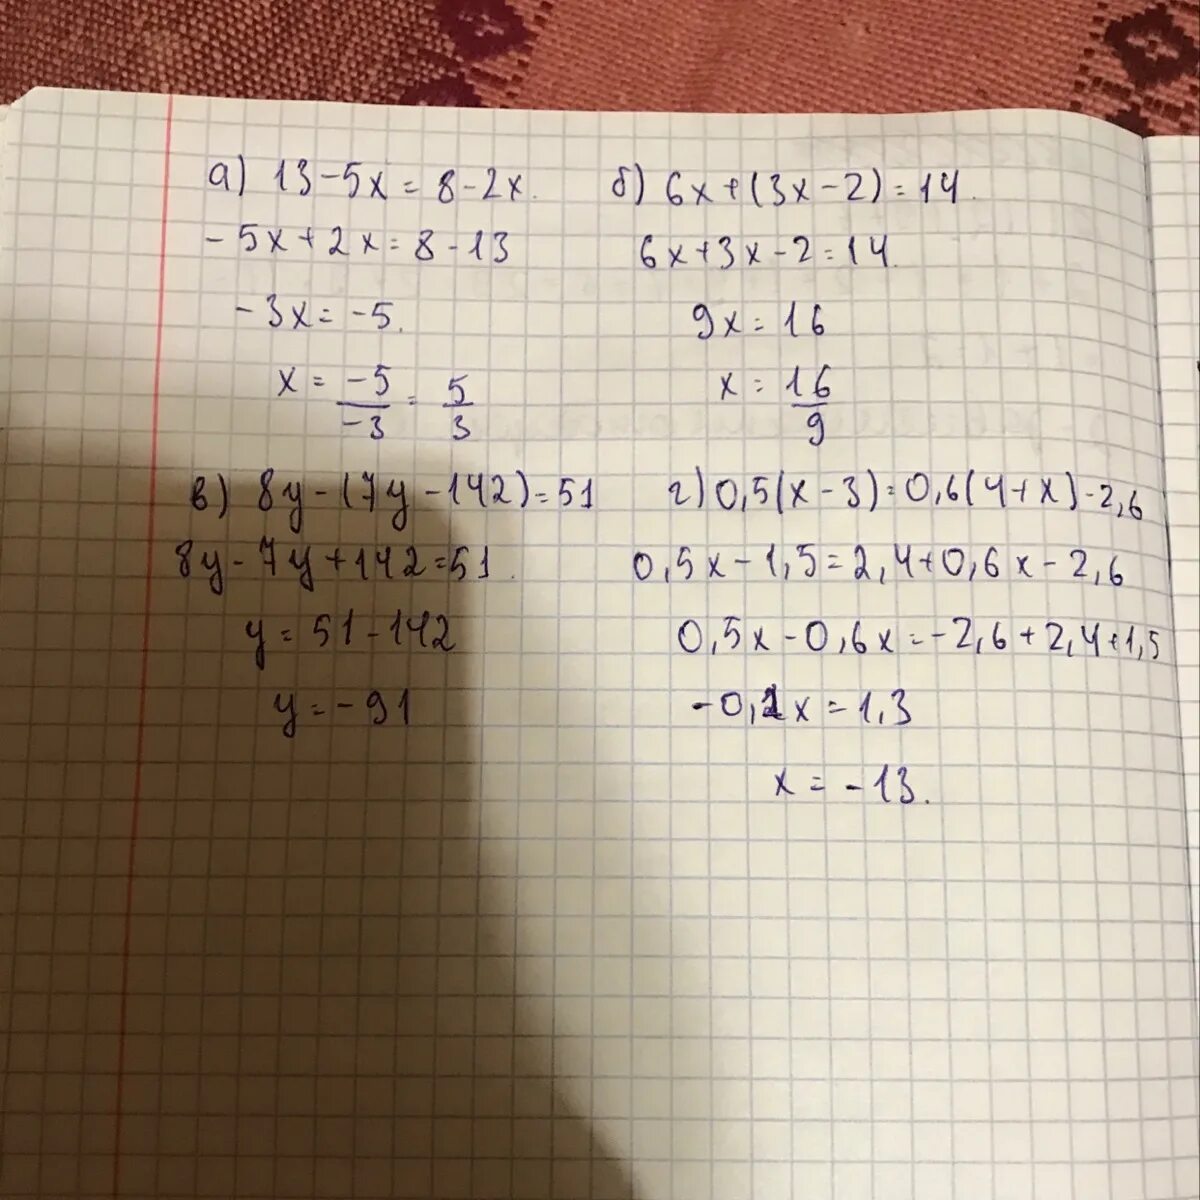 15 2x 3 решение. 8х-(7х-142)=51. Решение уравнения x+2x+6x+(6x-13)=77. Решить уравнение:x+(-6)=5. 3x+(5x+7)=15 решение.